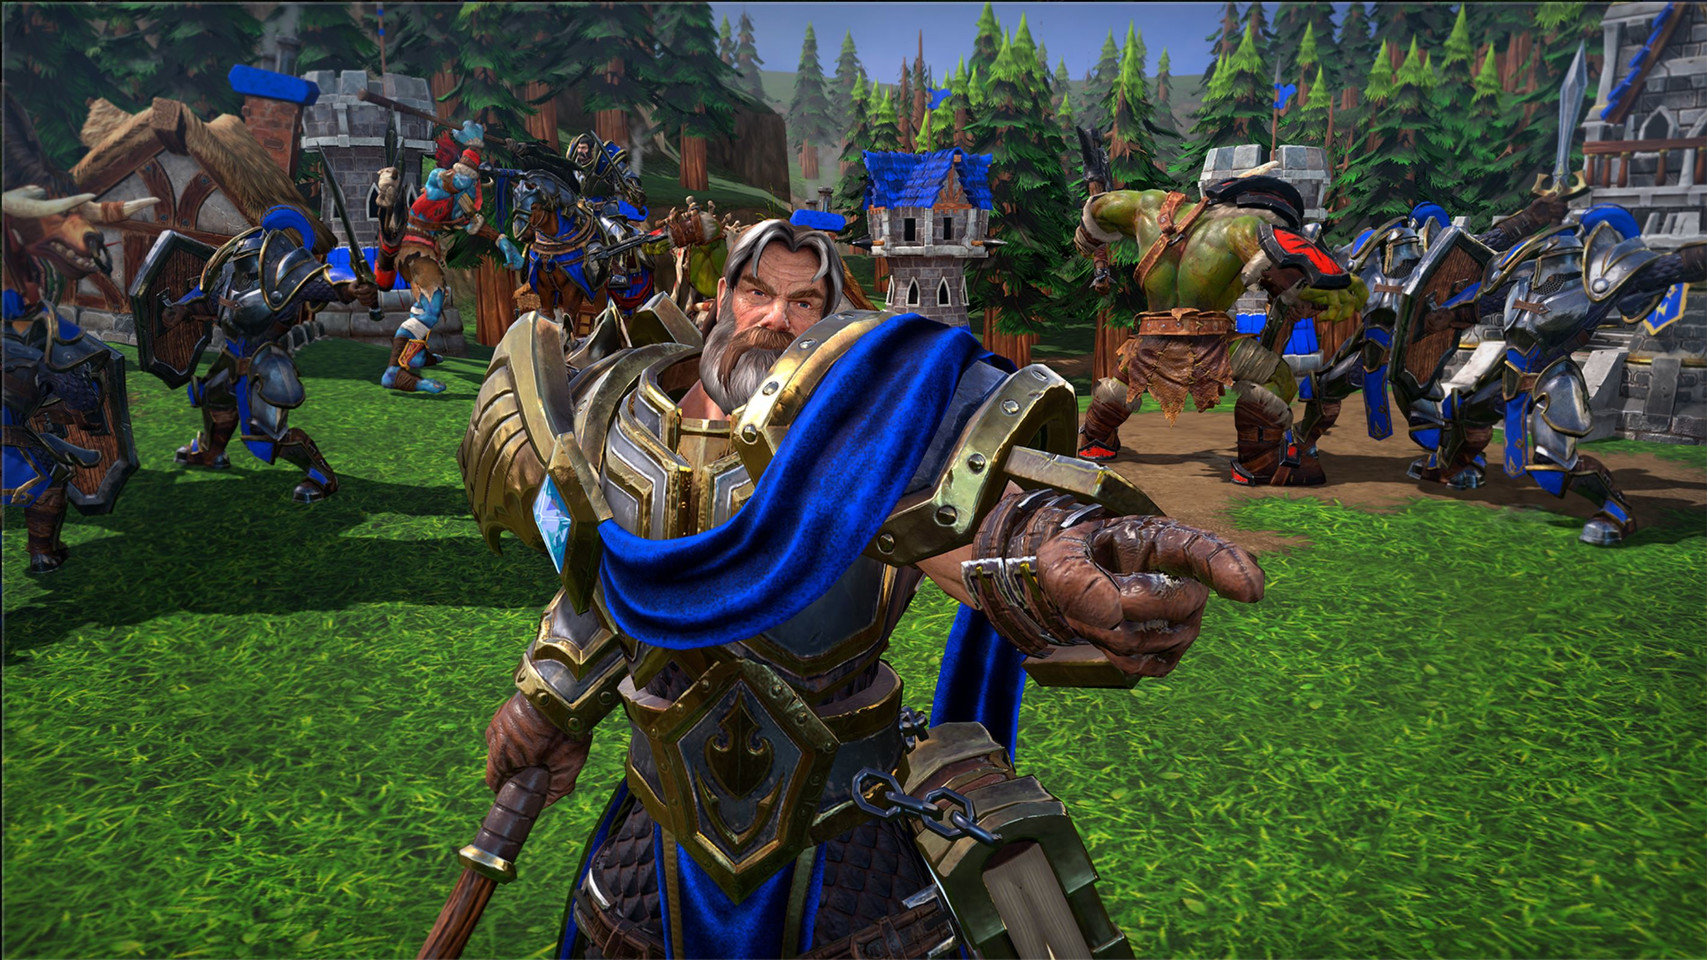 Blizzard Remasters Warcraft III, Releases 2019 as Warcraft III